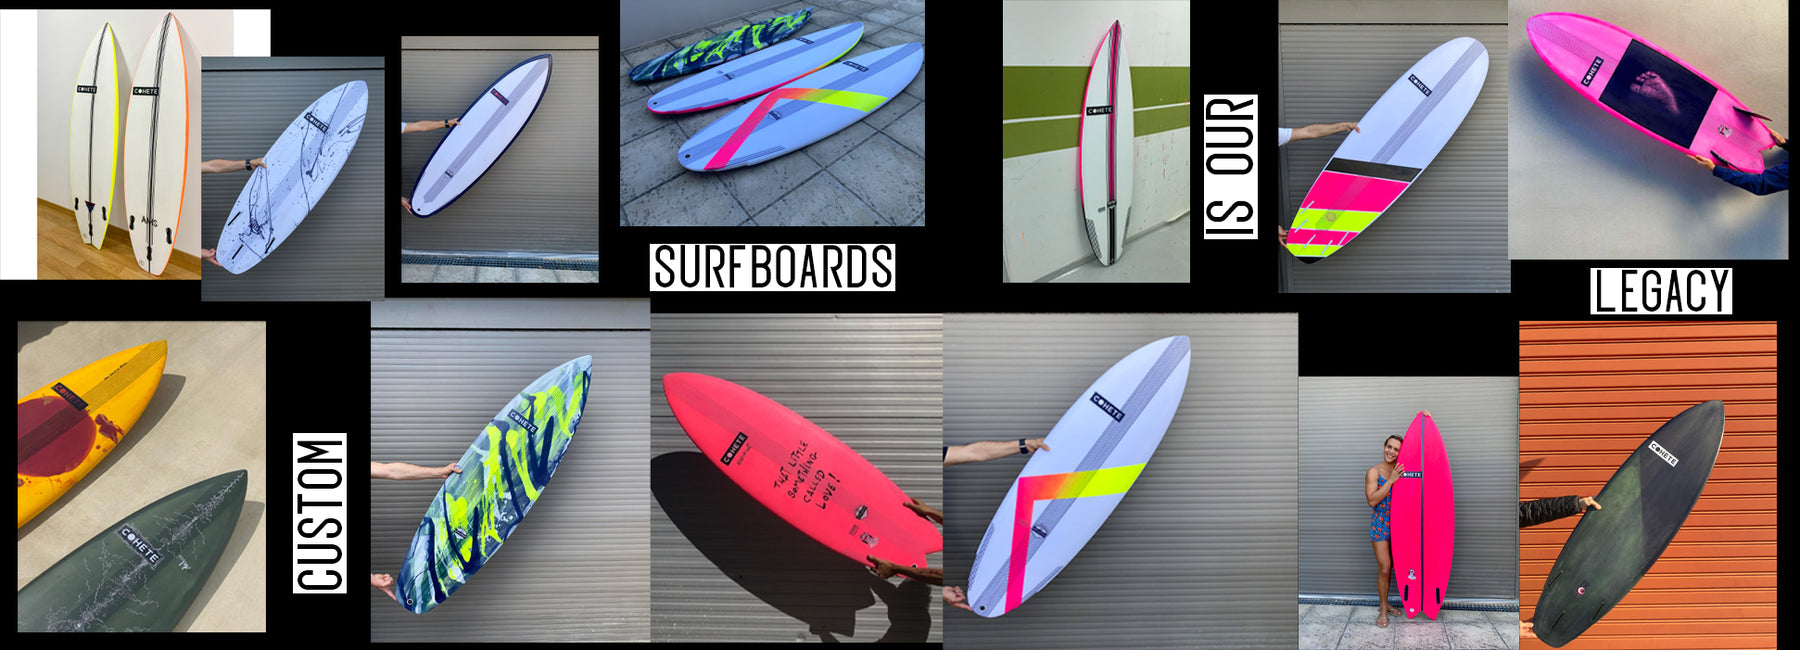 Cohete Surfboards